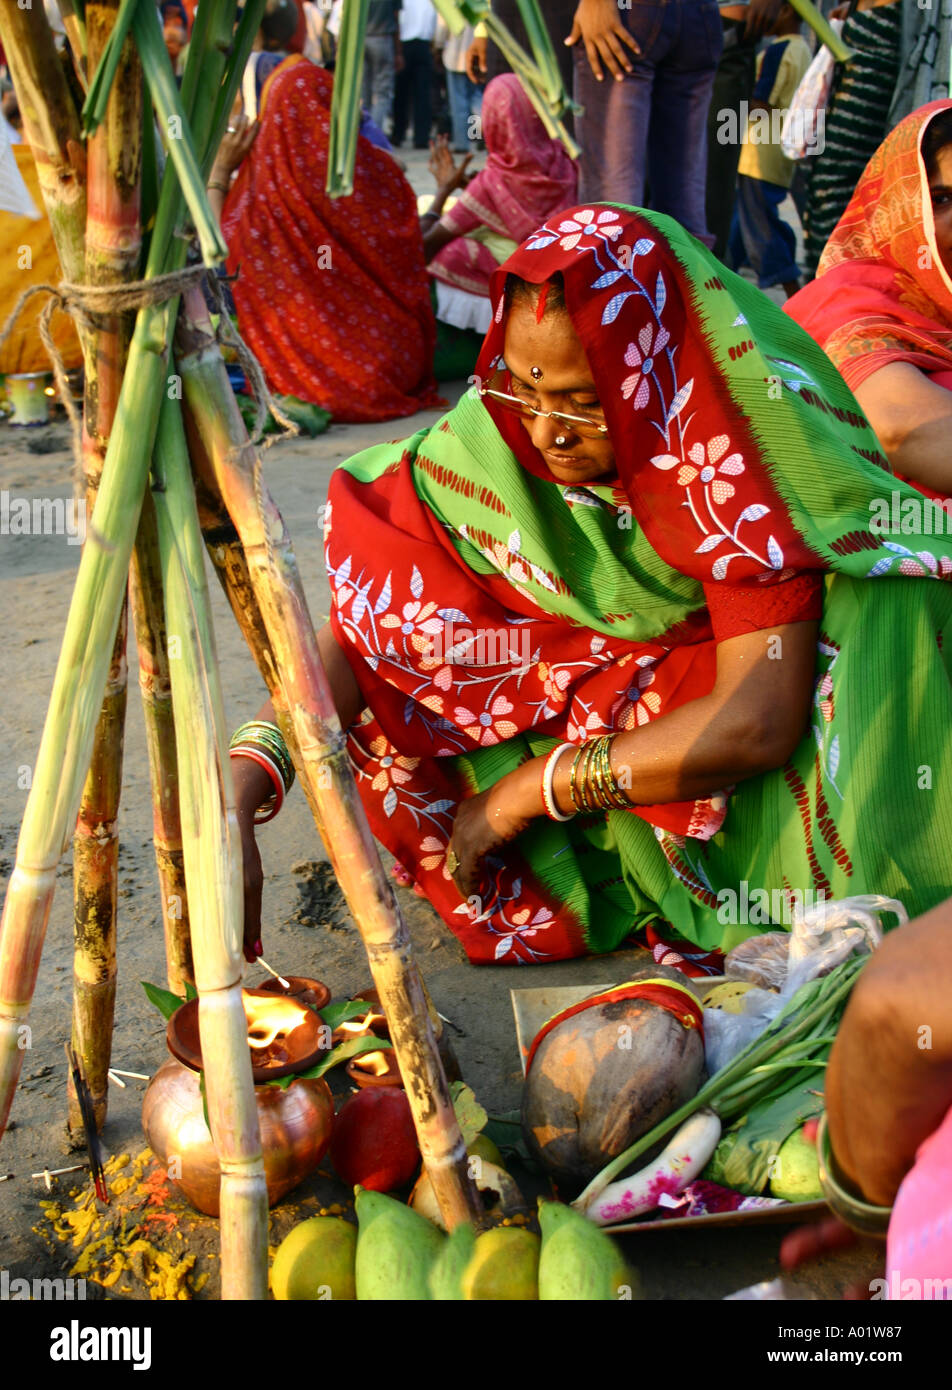 RSC0262 Women praying to sugar cane India Stock Photo - Alamy